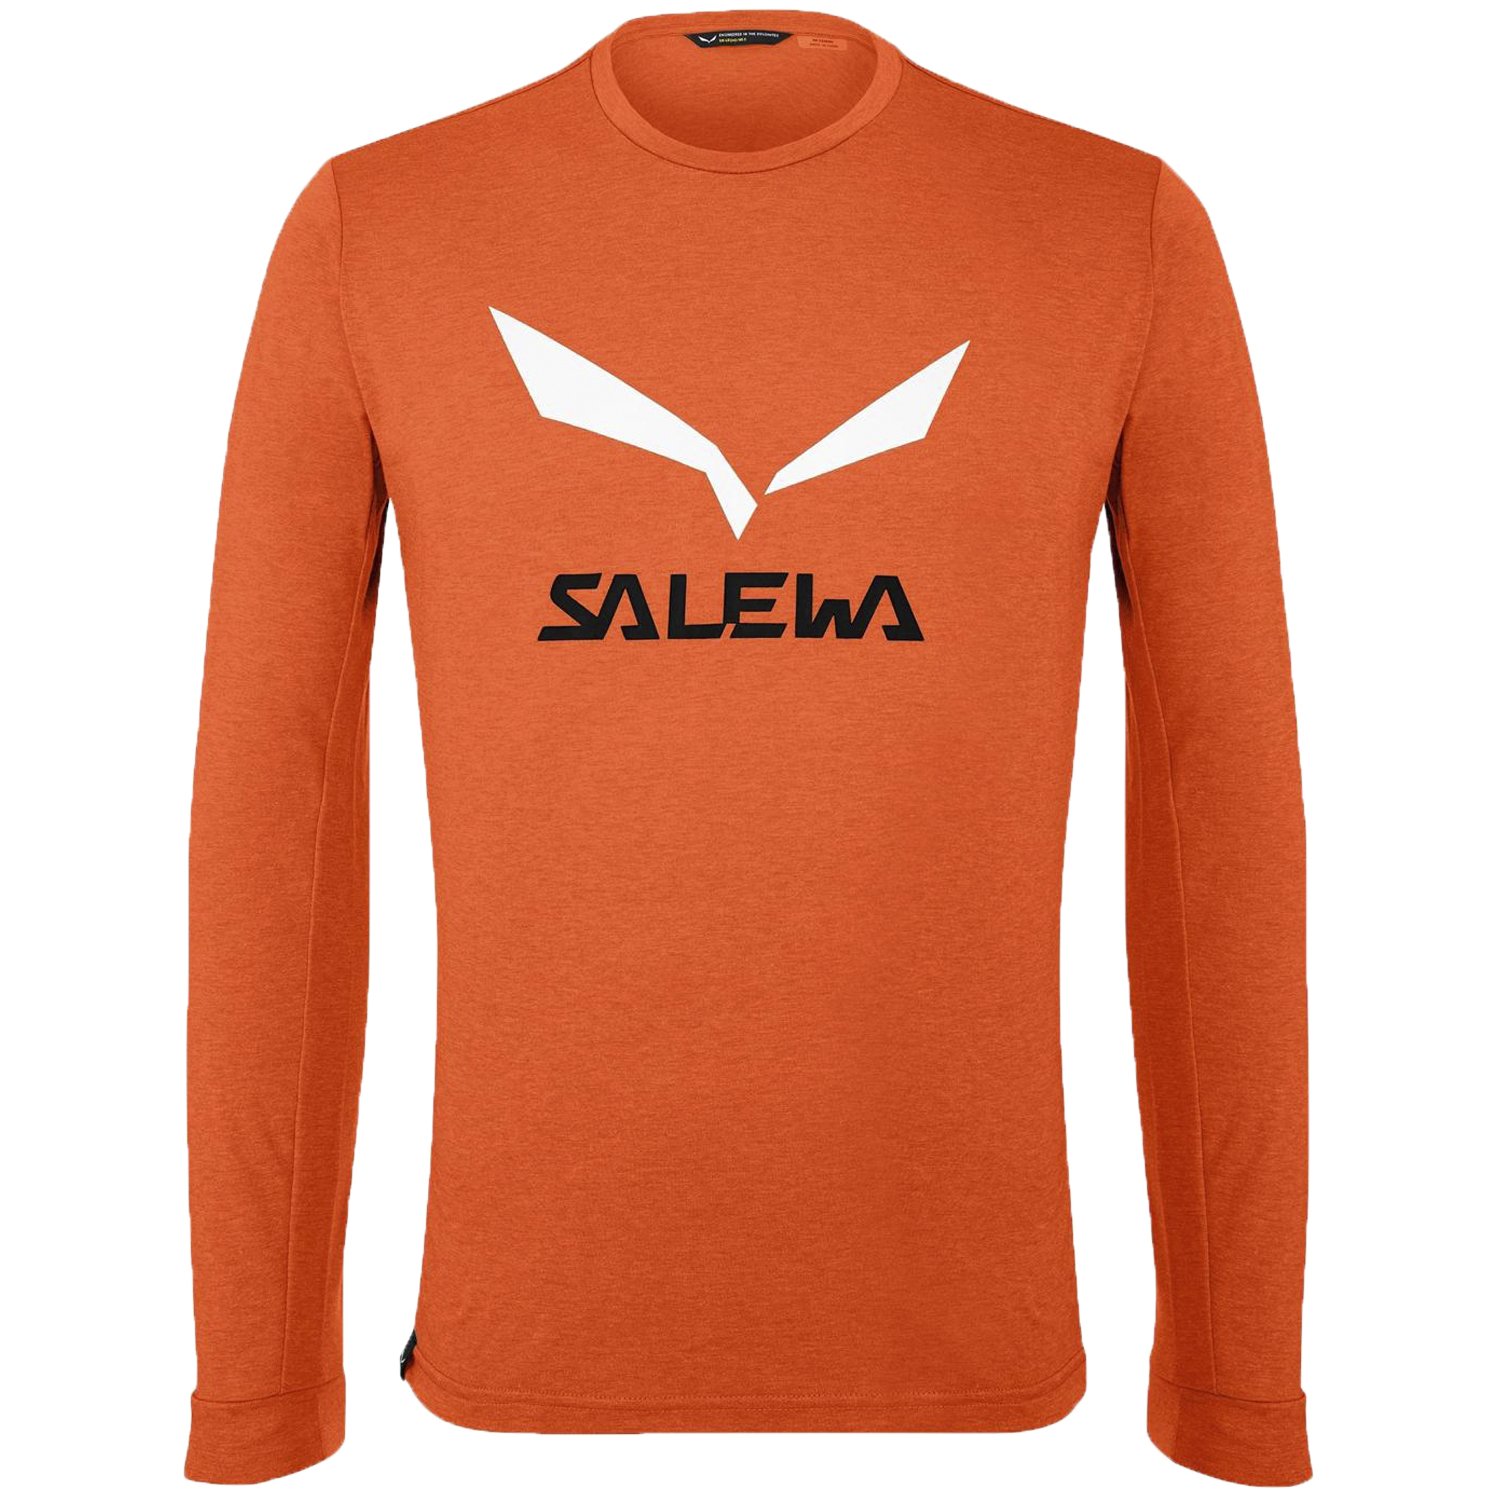 Футболка Salewa Solidlogo Dry Men's L/S Tee Red Orange Melange, с длинным рукавом, мужская, 00-0000027340_4156 mjolk футболка с длинным рукавом зонтики